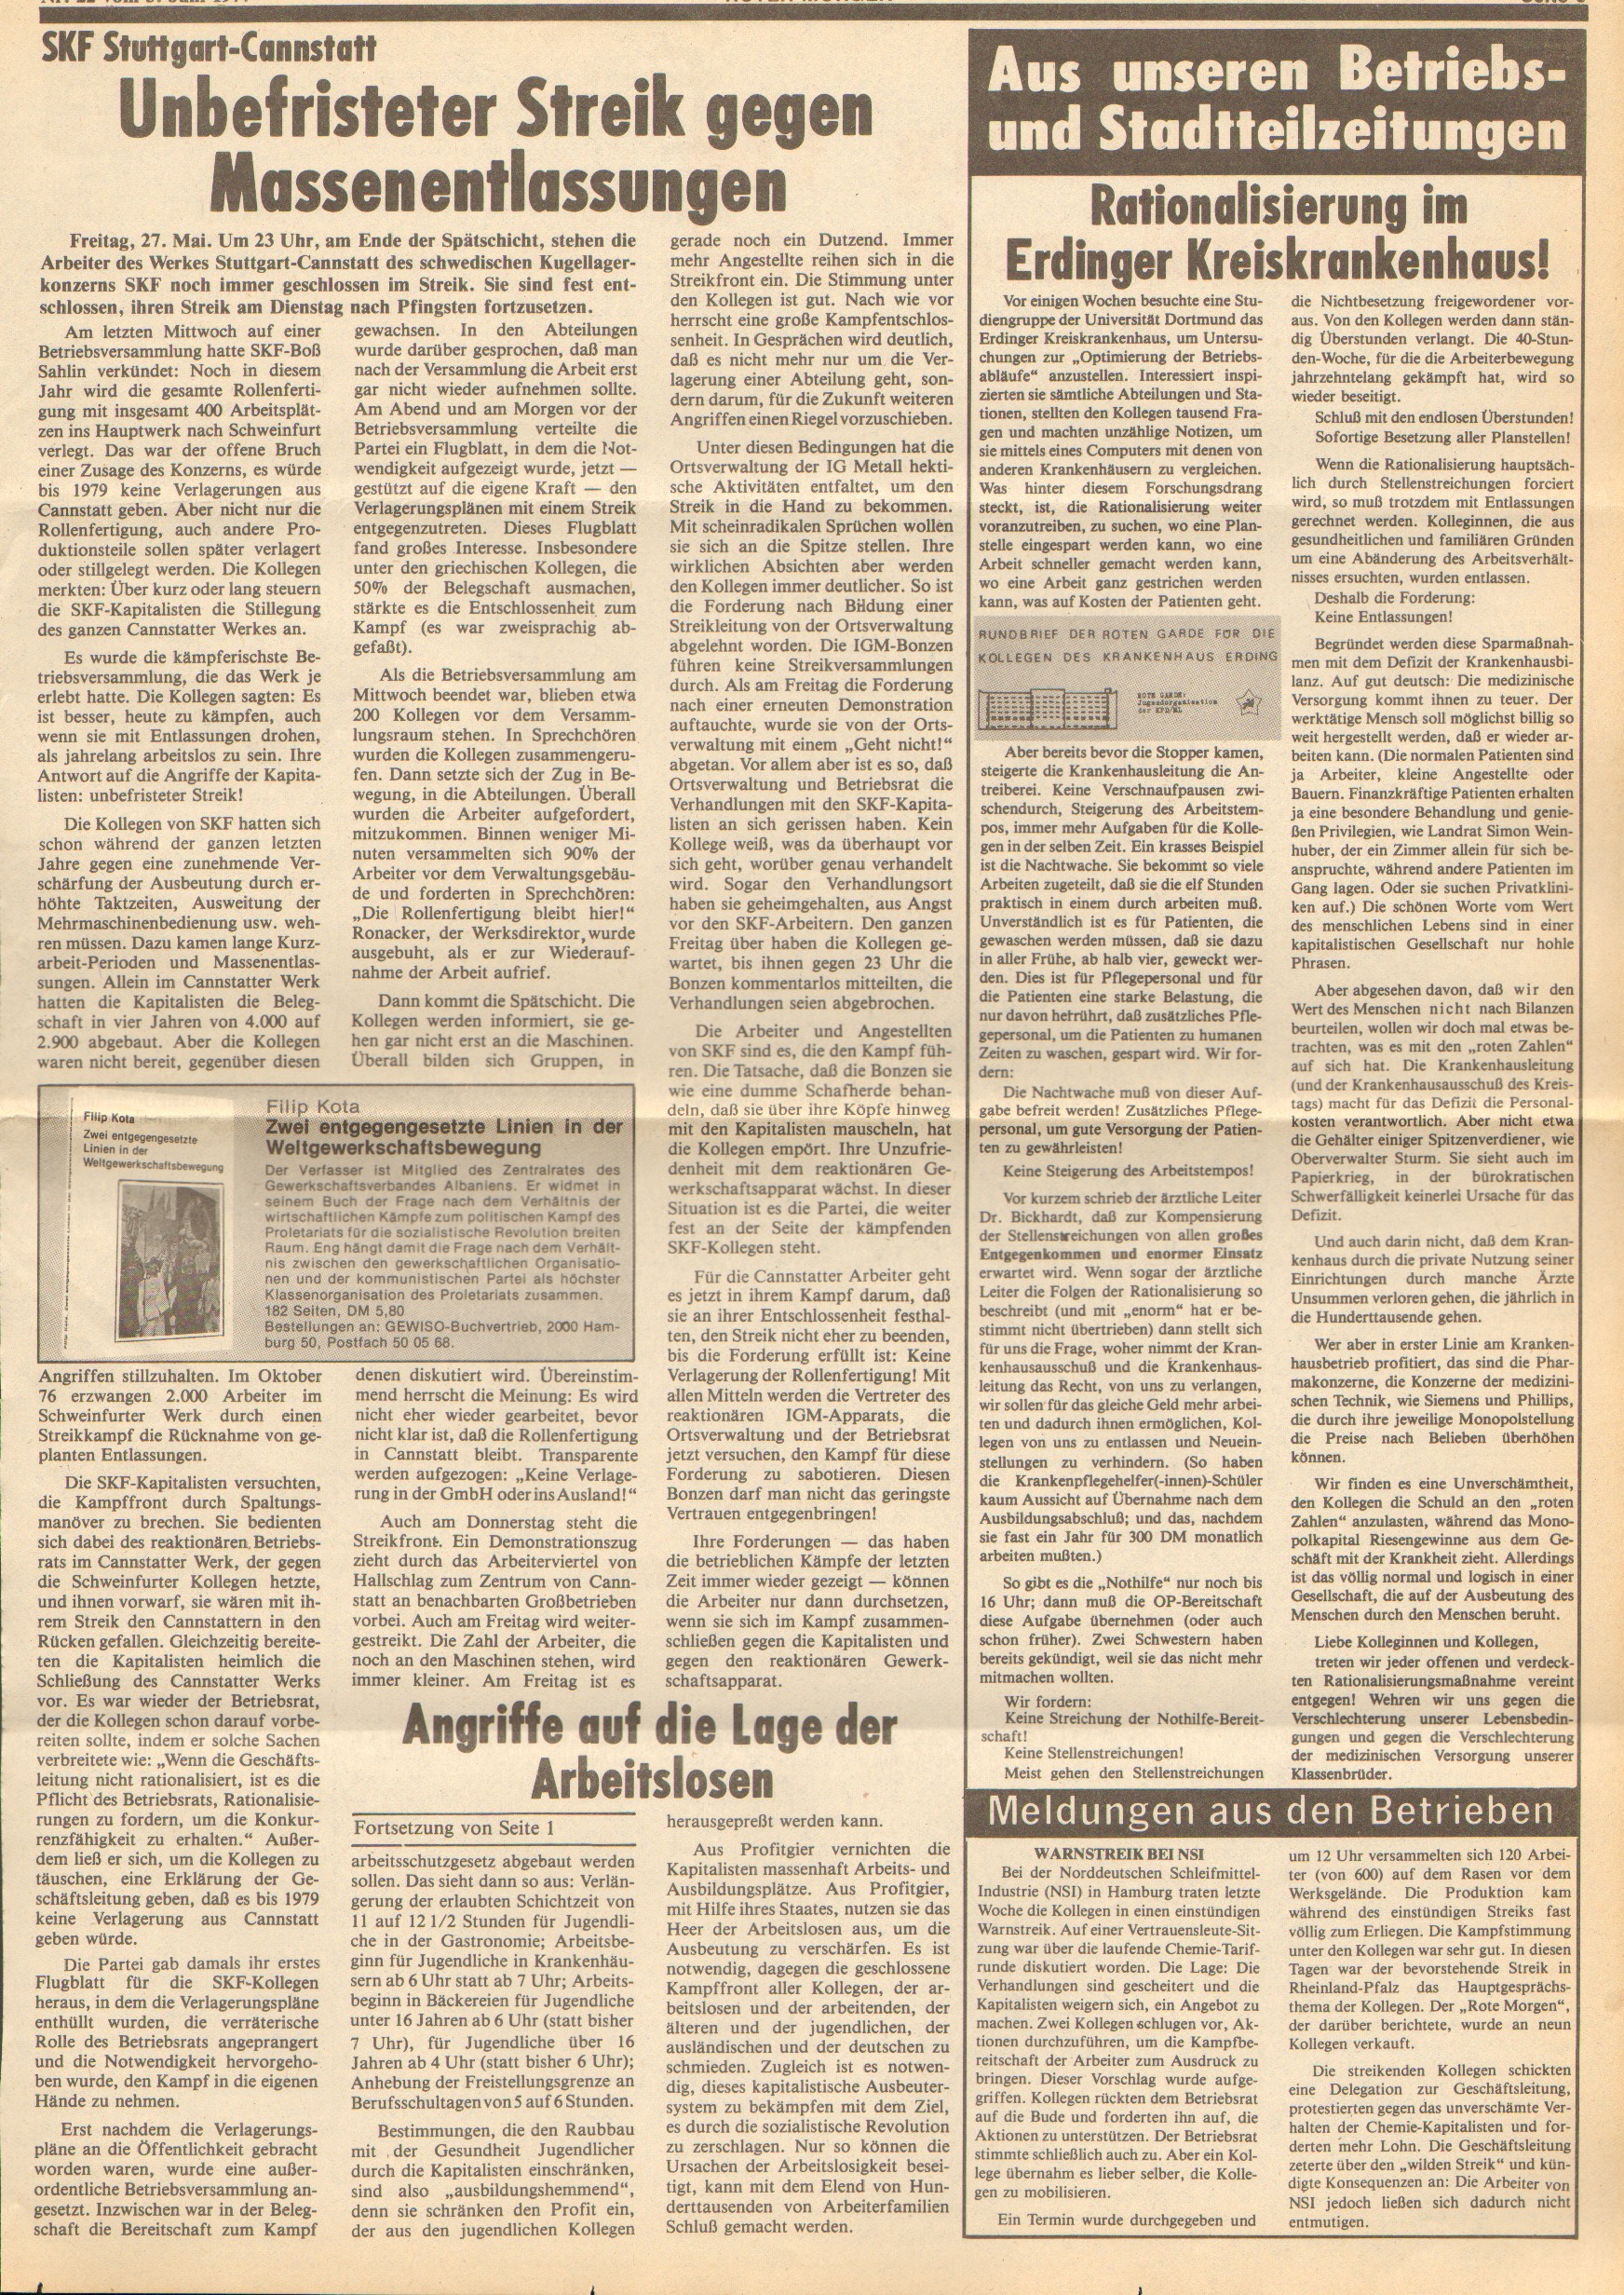 Roter Morgen, 11. Jg., 3. Juni 1977, Nr. 22, Seite 5